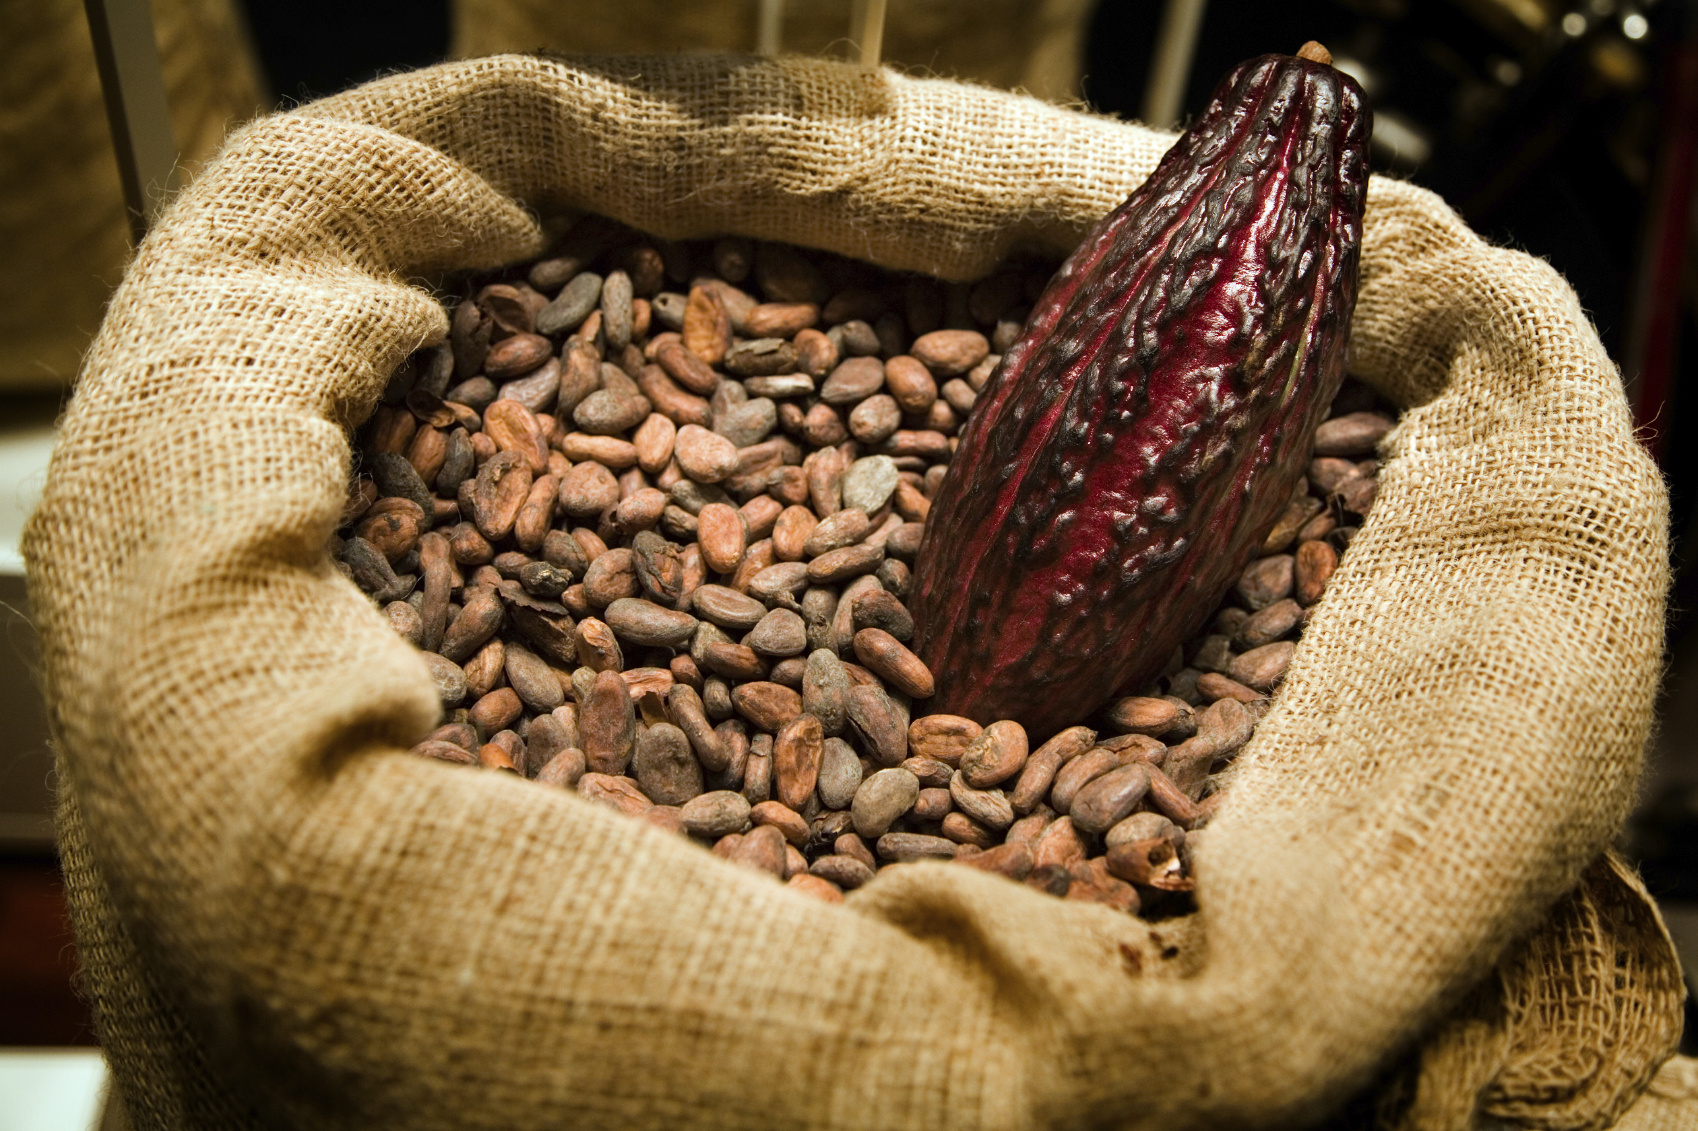 http://zoom50.files.wordpress.com/2010/06/raw-cacao-beans.jpg